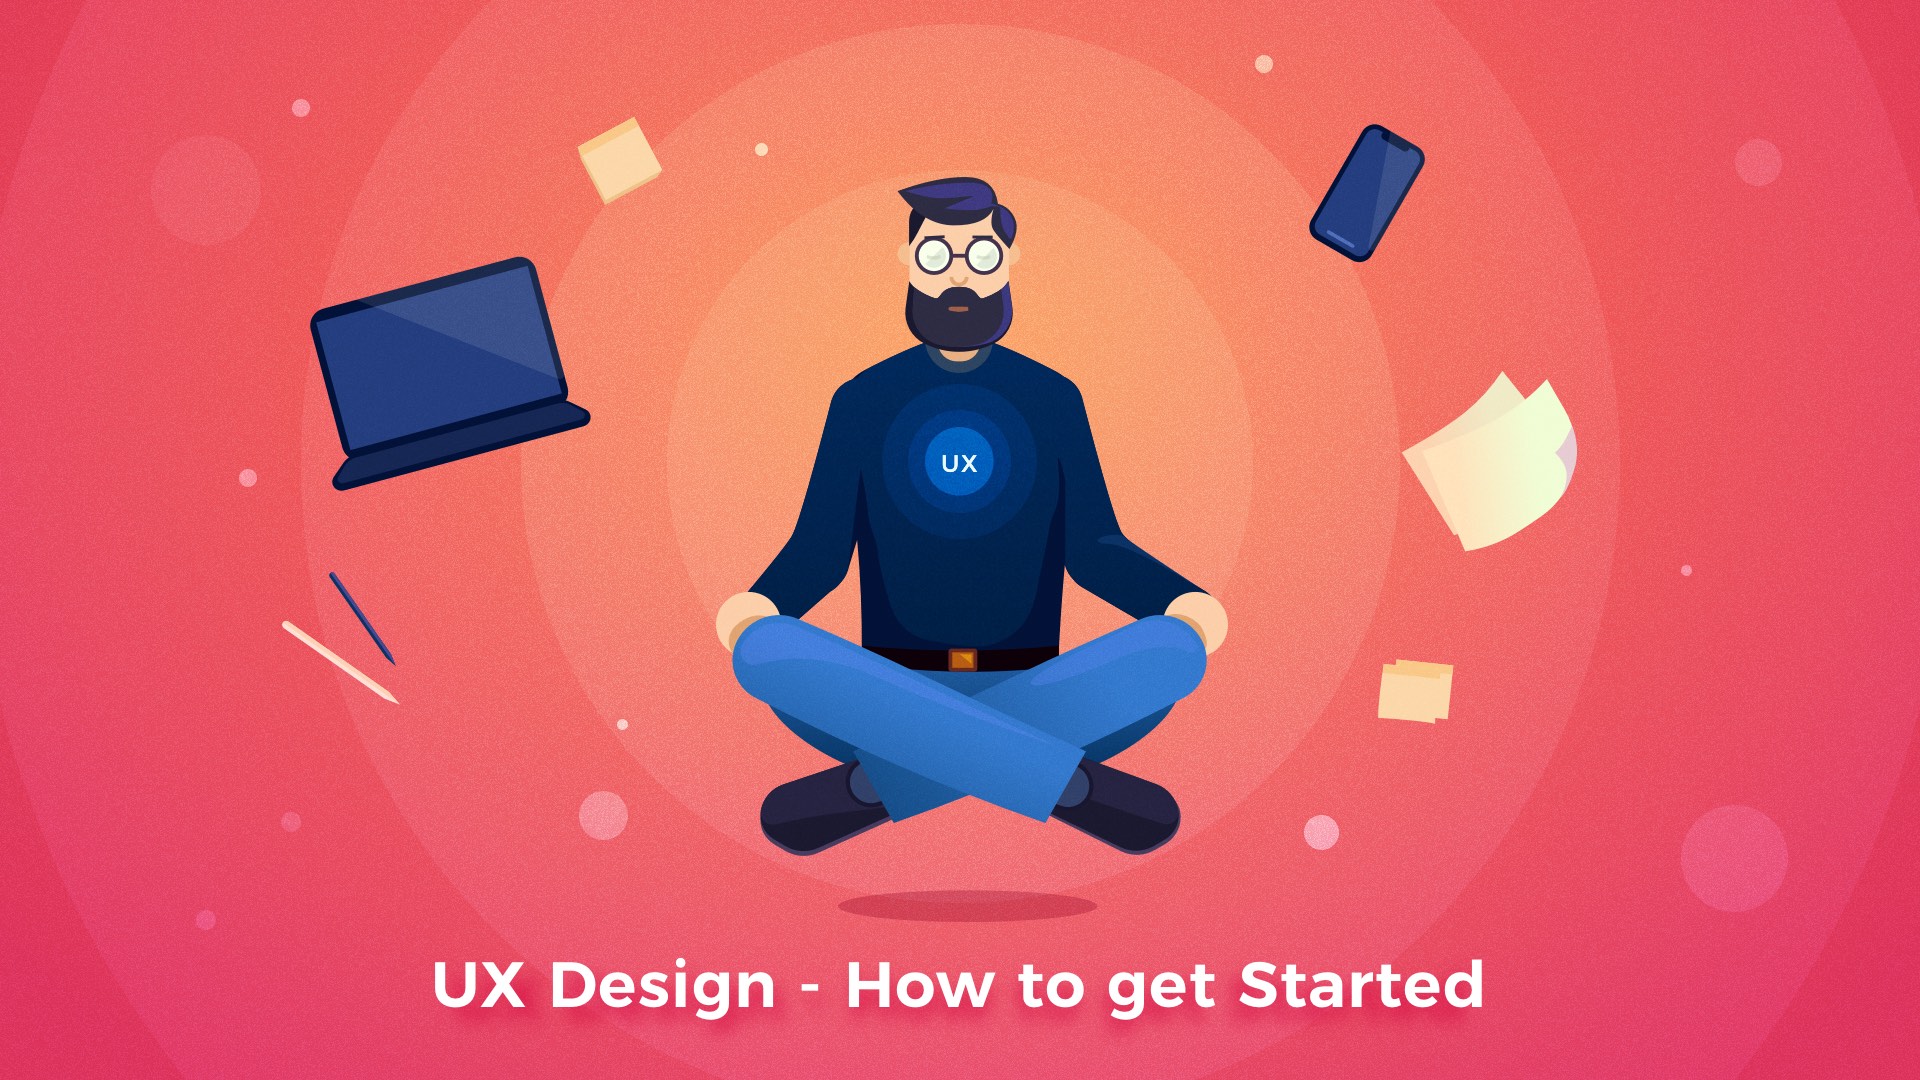 UX Design to get started